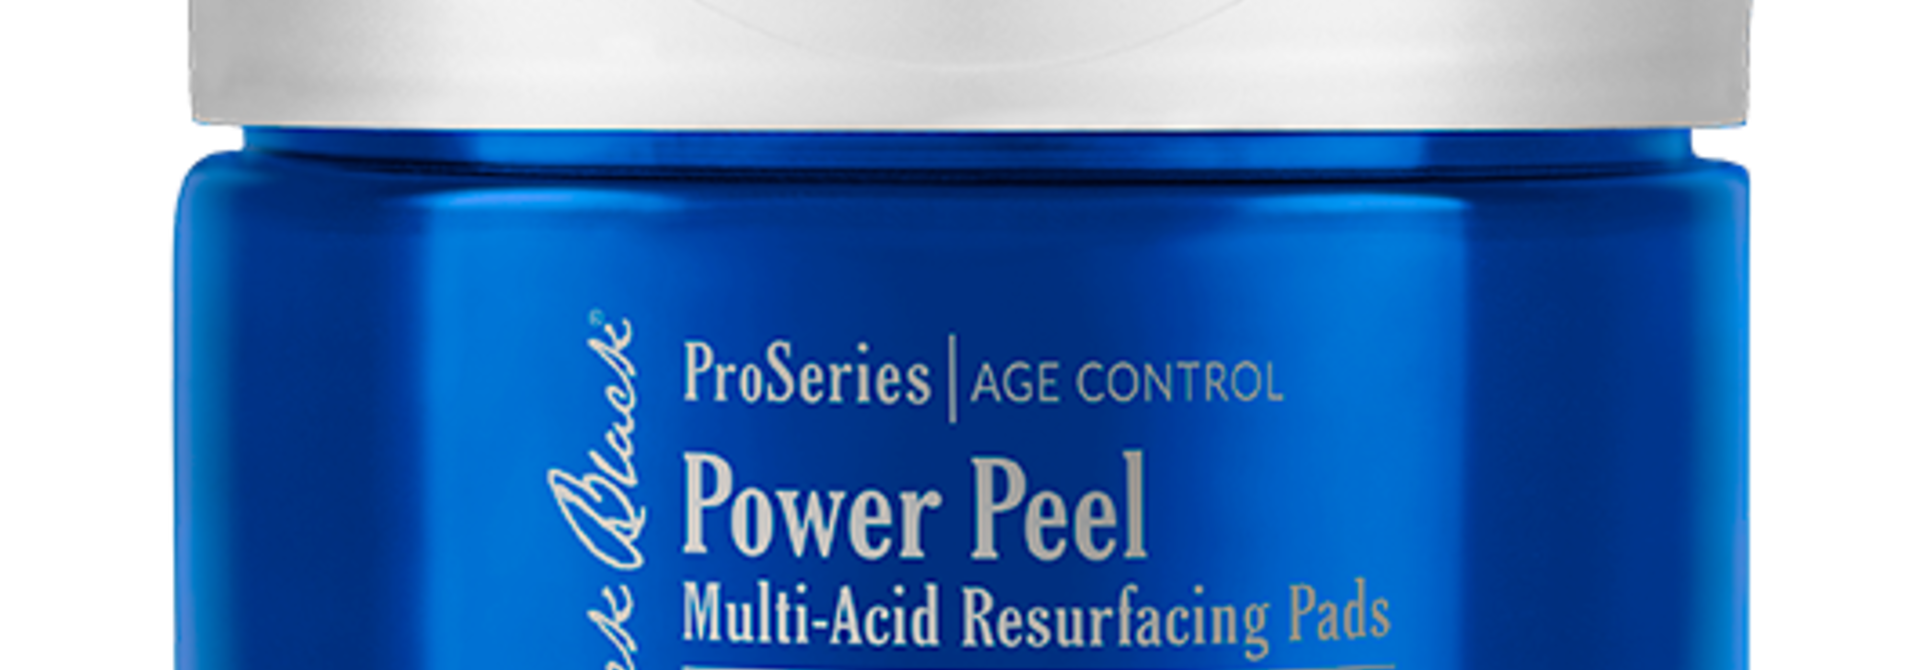 Power Peel Multi-Acid Resurfacing Pads | The Facial Skincare Collection